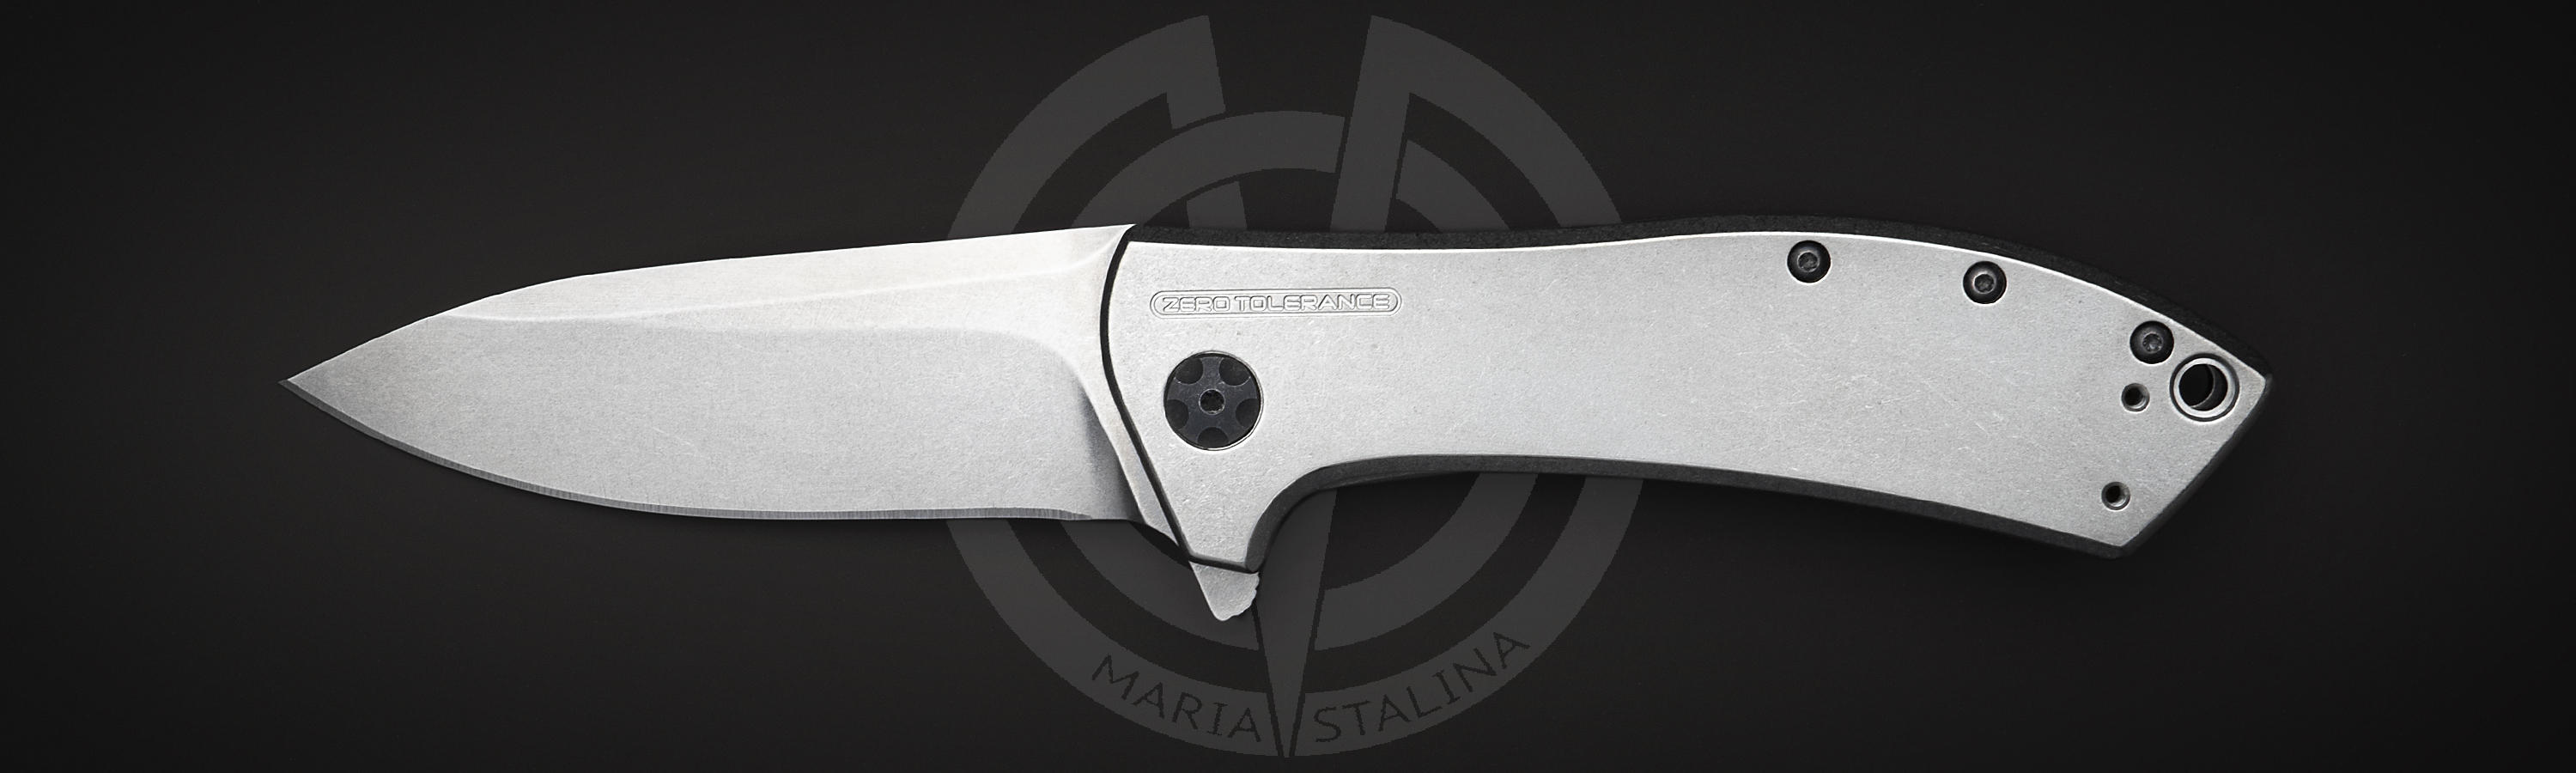 ZT нож 0801 Rexford Design